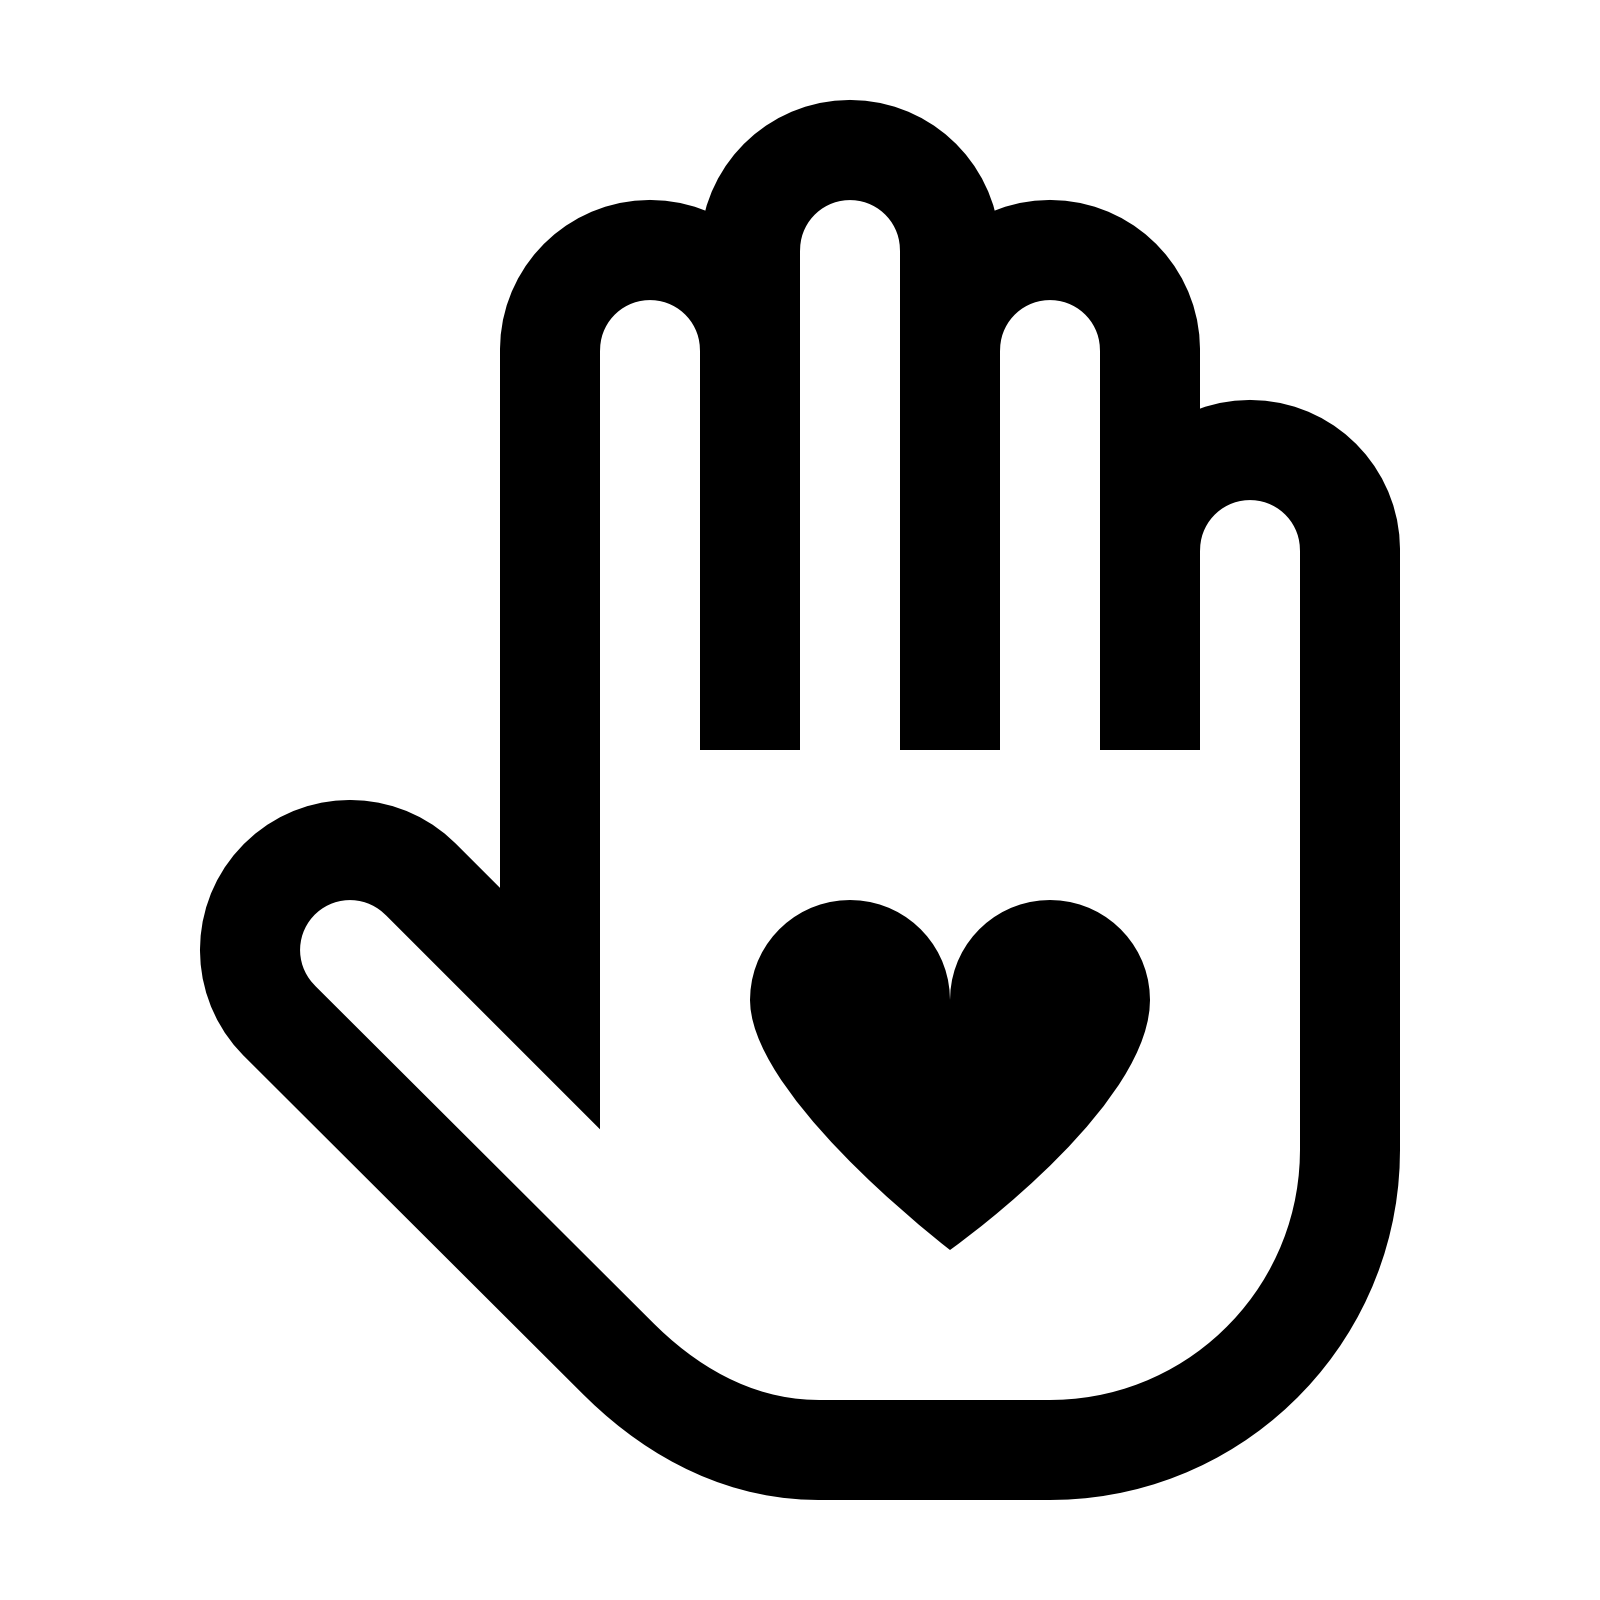 Volunteer icons | Noun Project